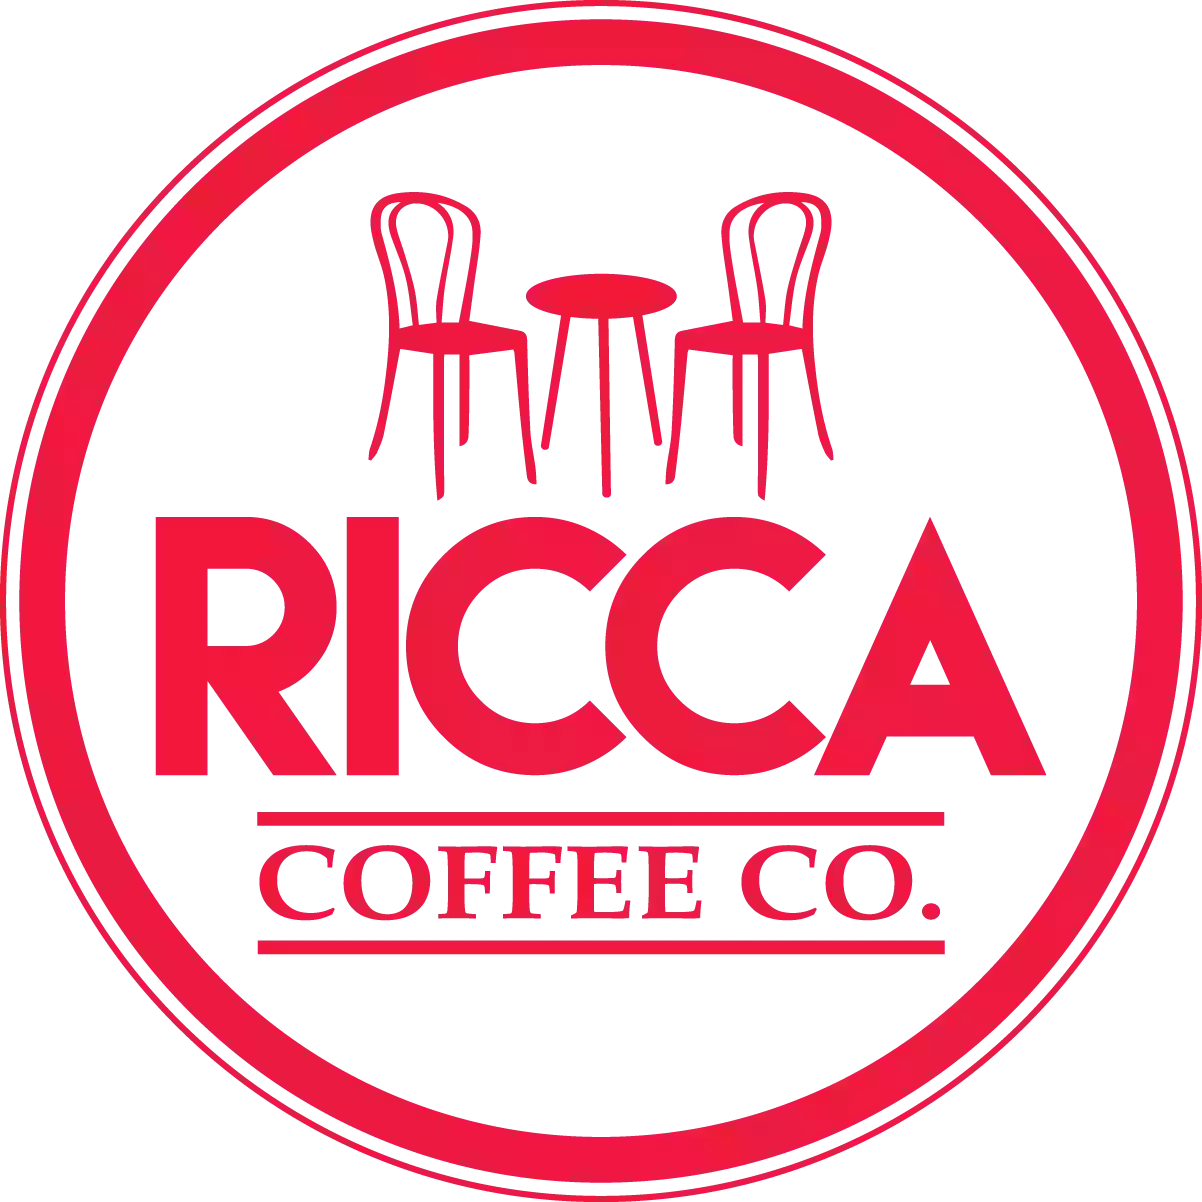 Ricca Coffee Company